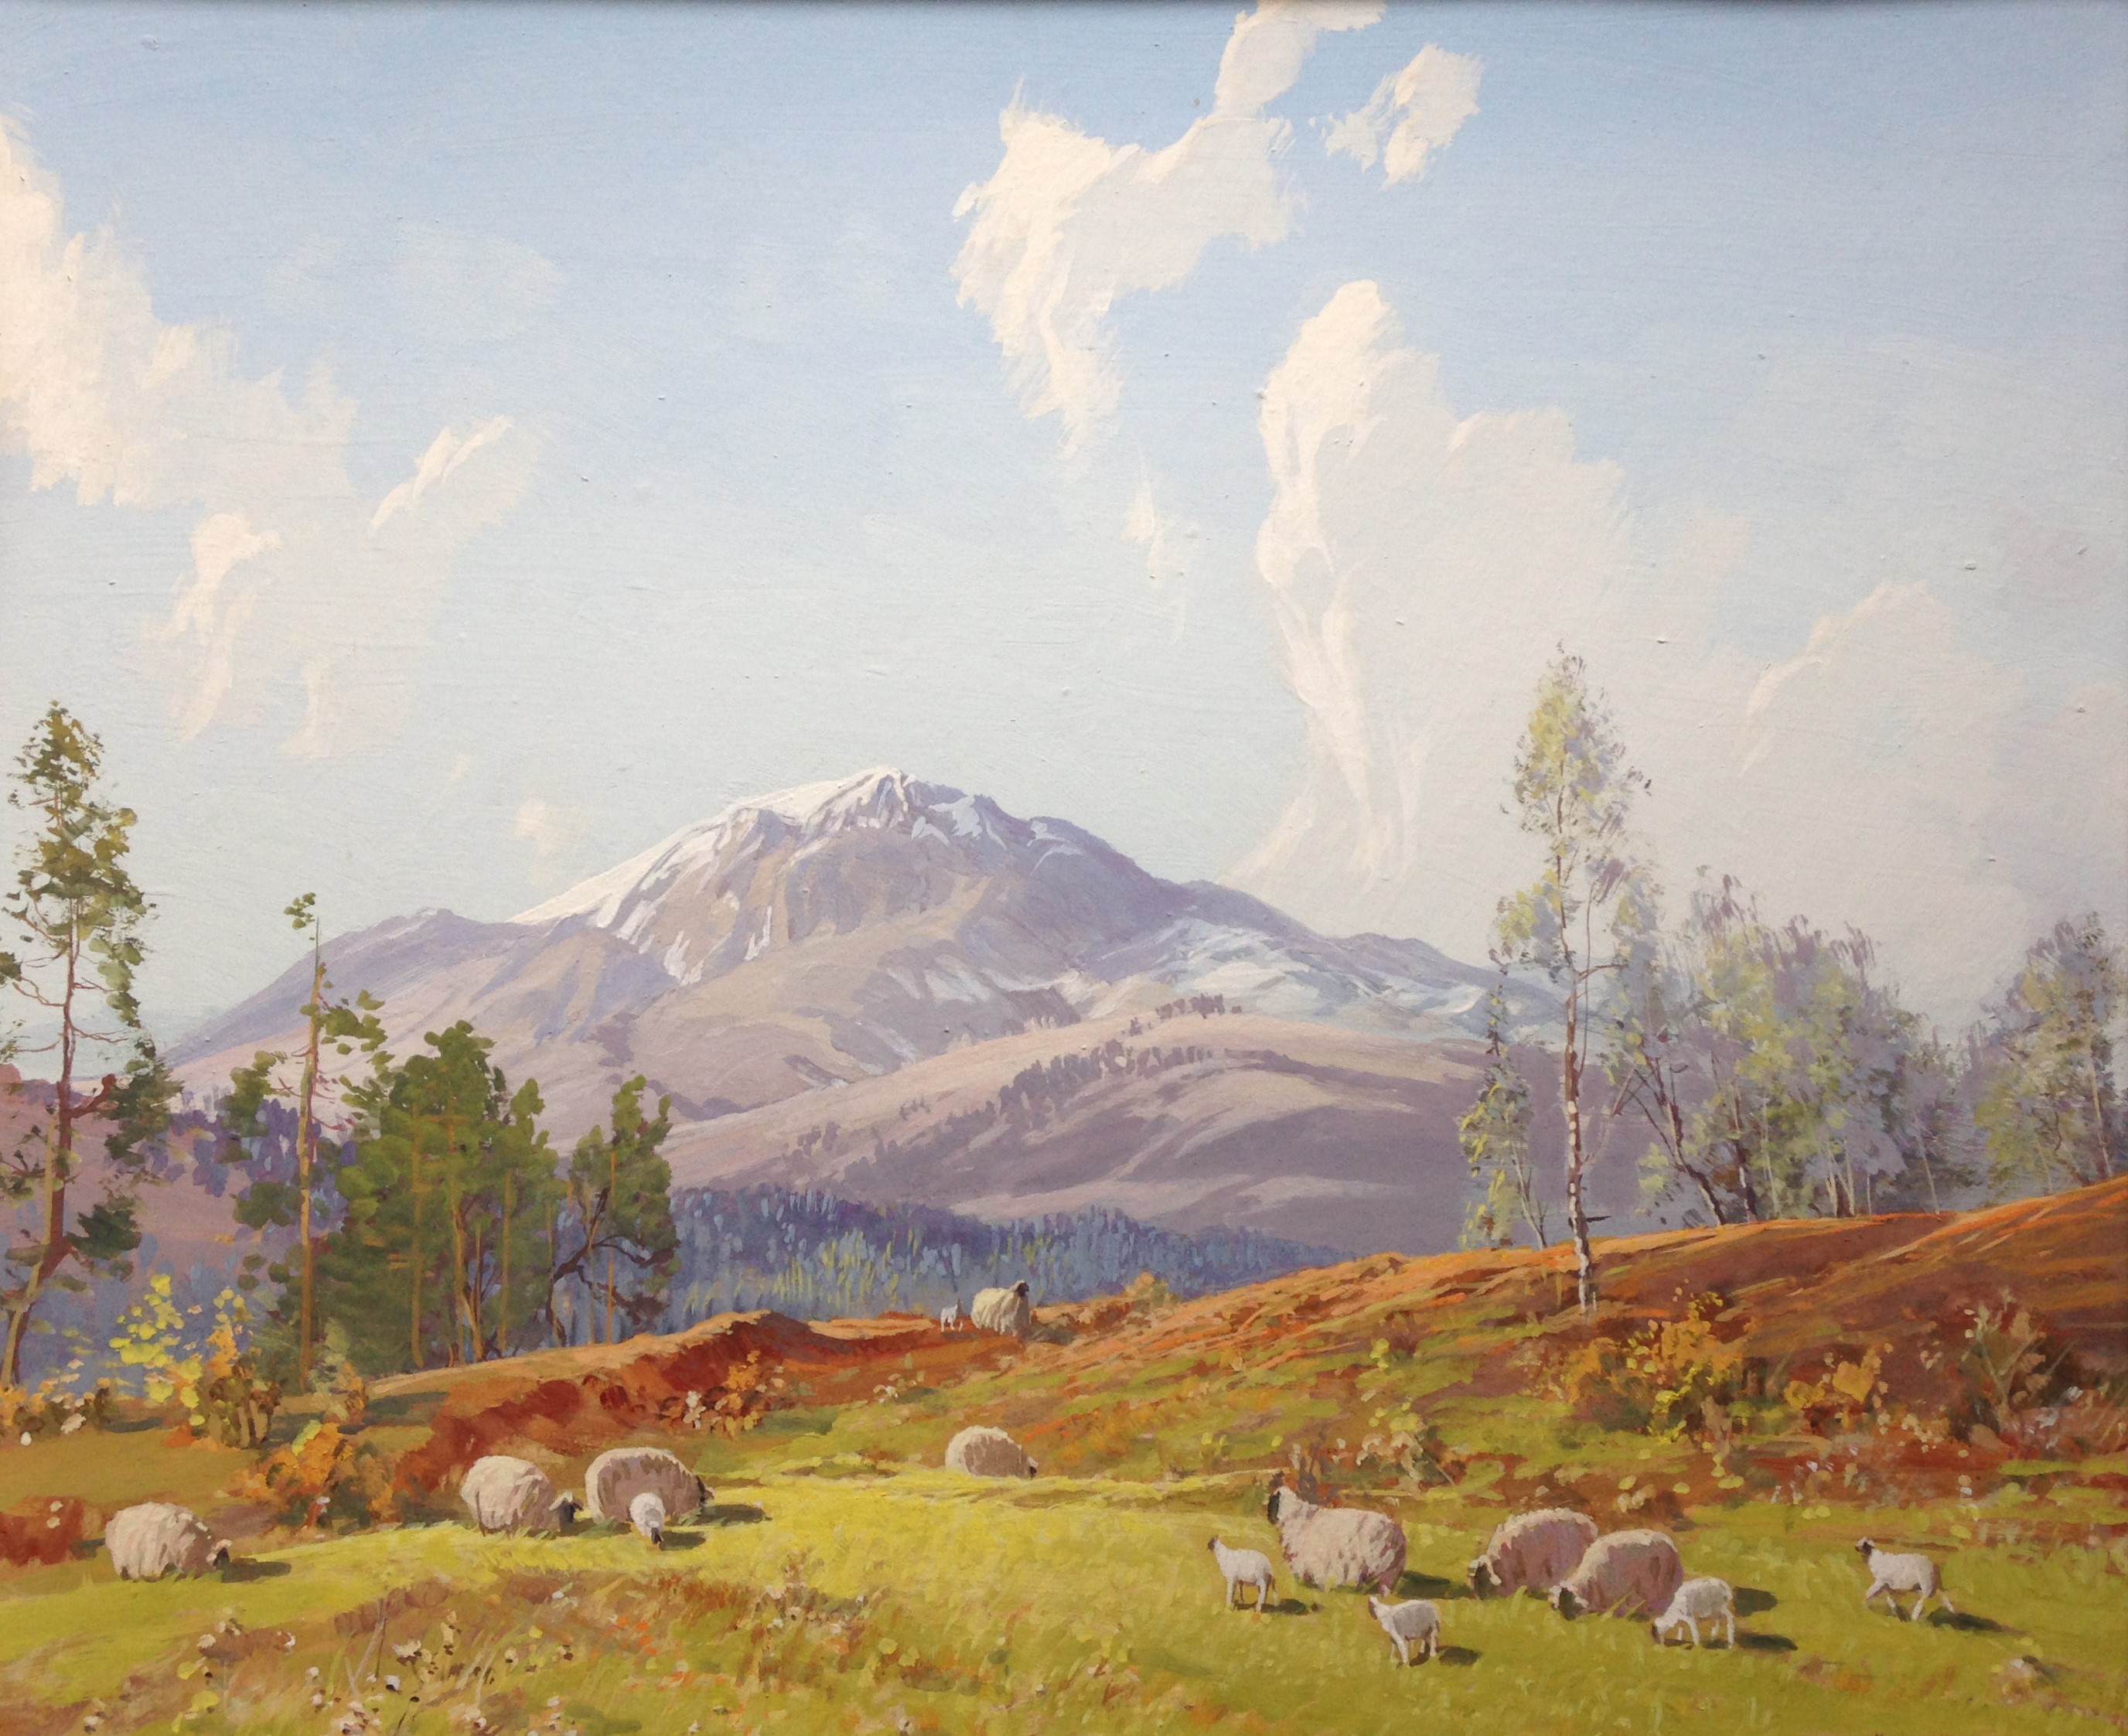 Tom Campbell 1865-1943 signed oil on canvas, Springtime Scotland